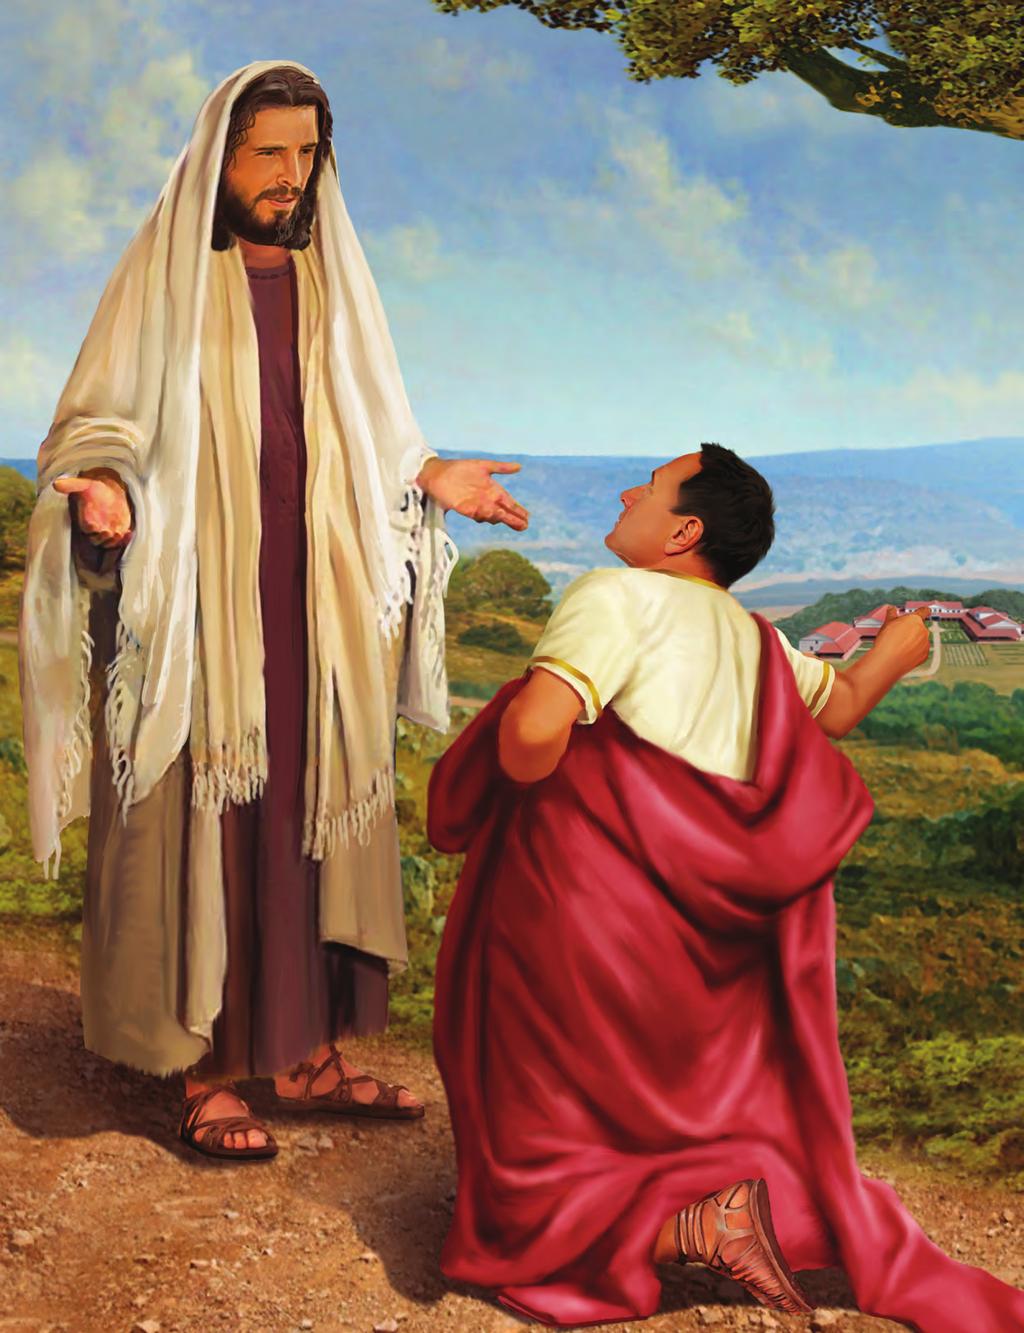 JESUS HEALED THE OFFICIAL S SON JOHN